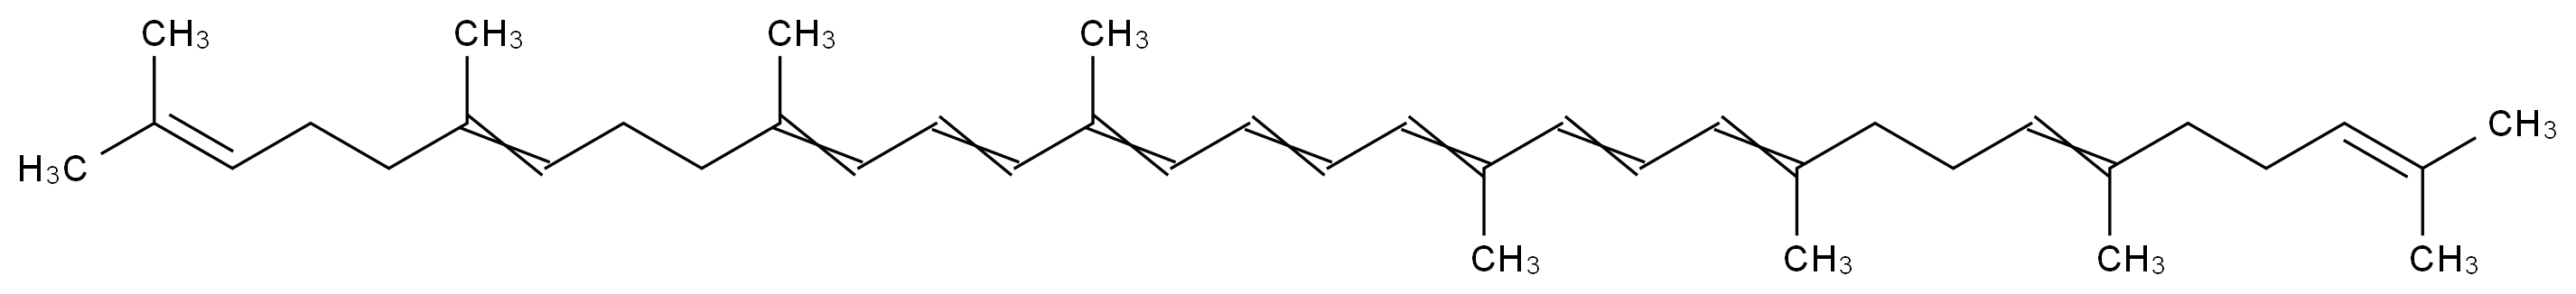 Zeta-Carotene_分子结构_CAS_72746-33-9)